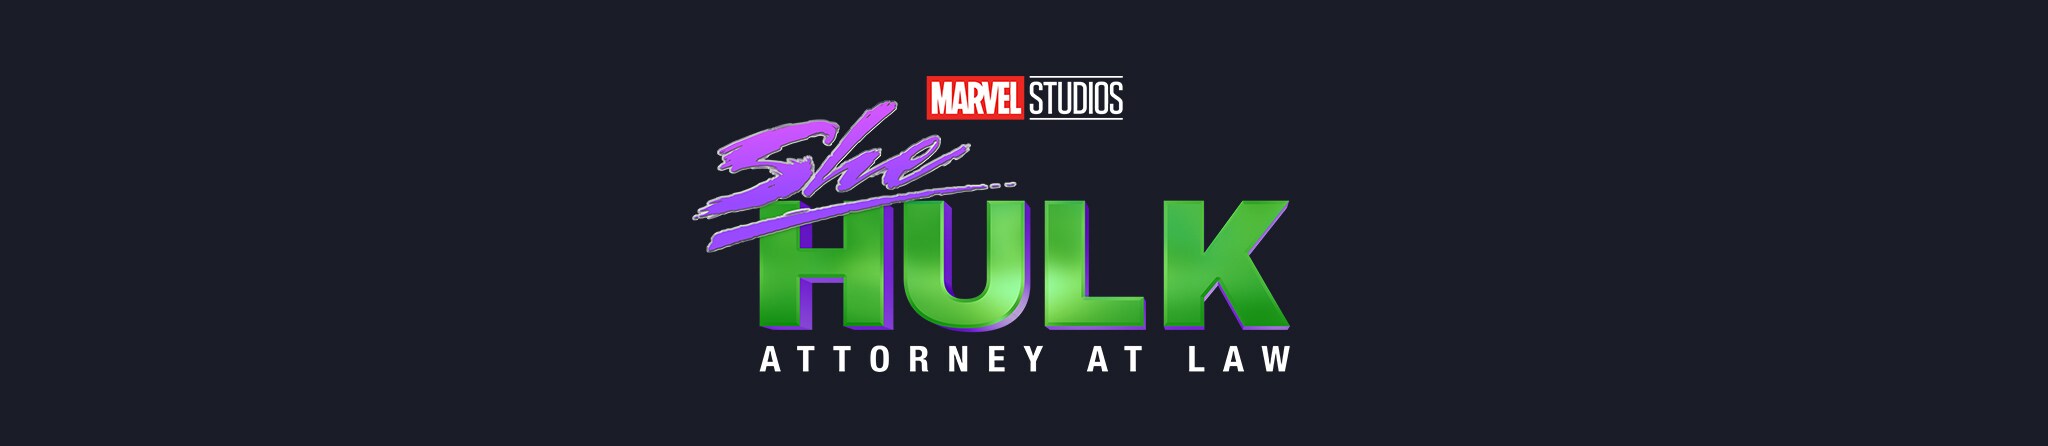 Marvel Studios | She-Hulk: Attorney At Law